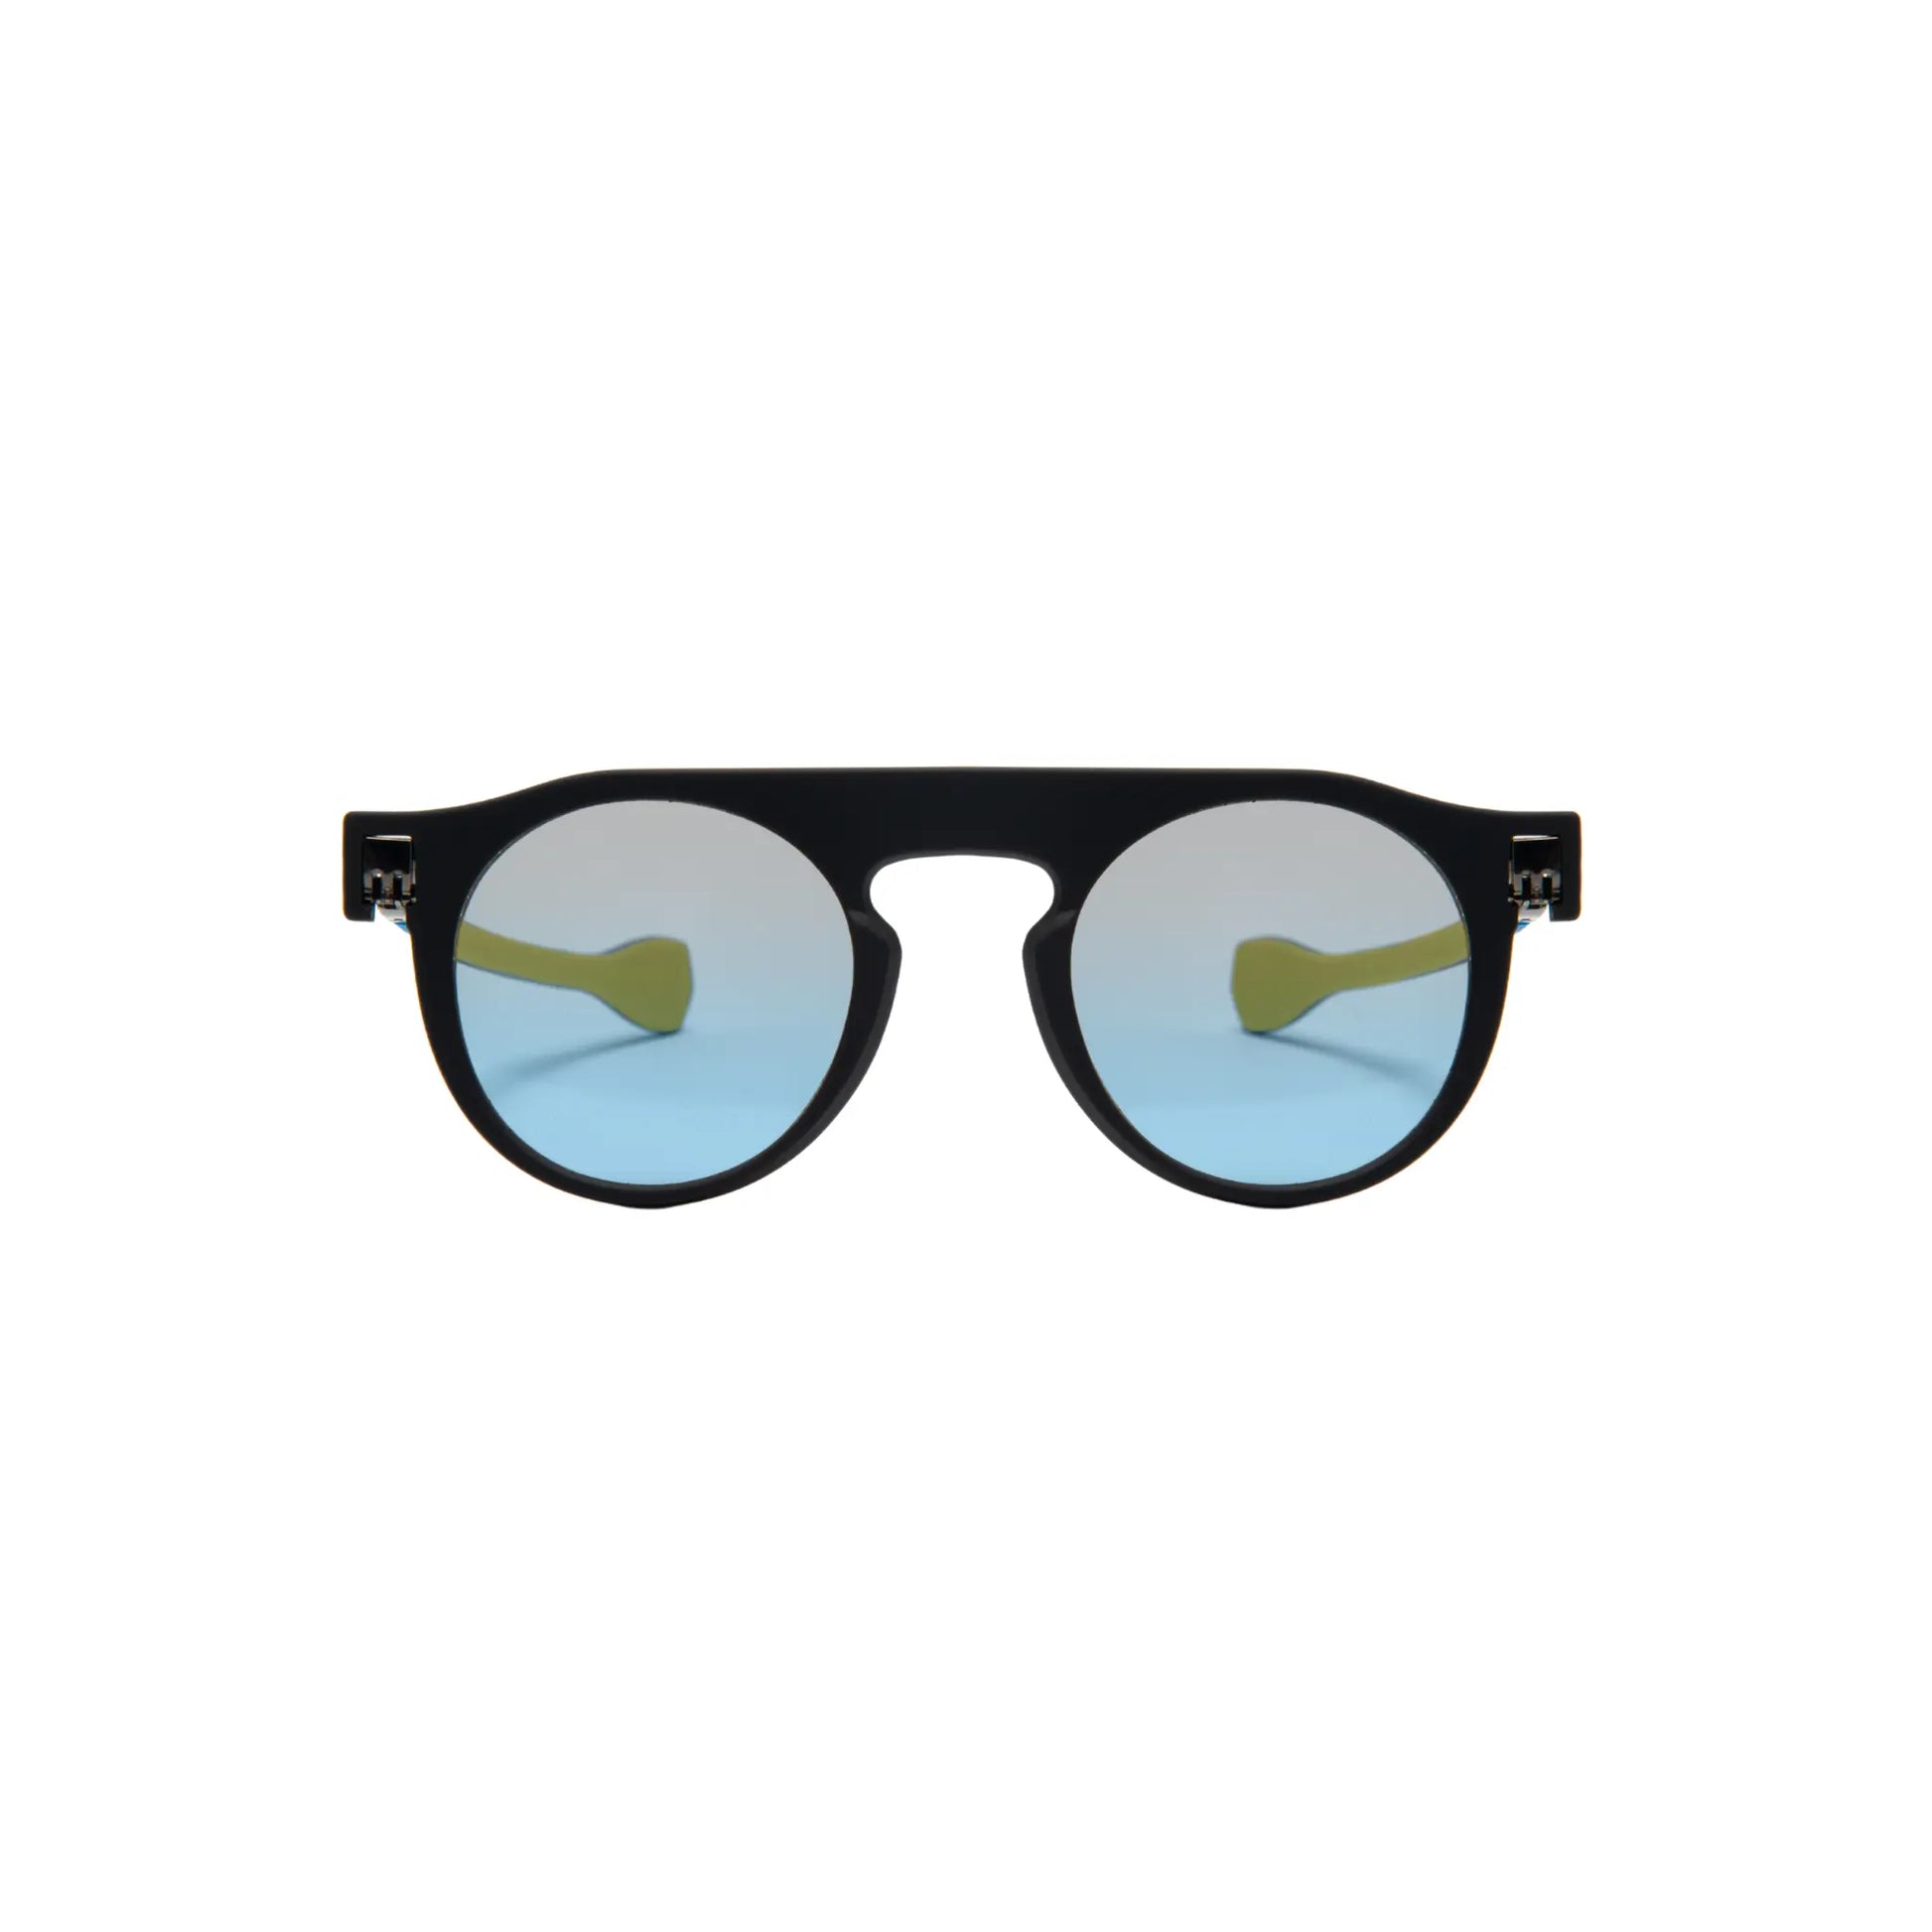 Reverso sunglasses black/Blue & yellow reversible & ultra light front view 2